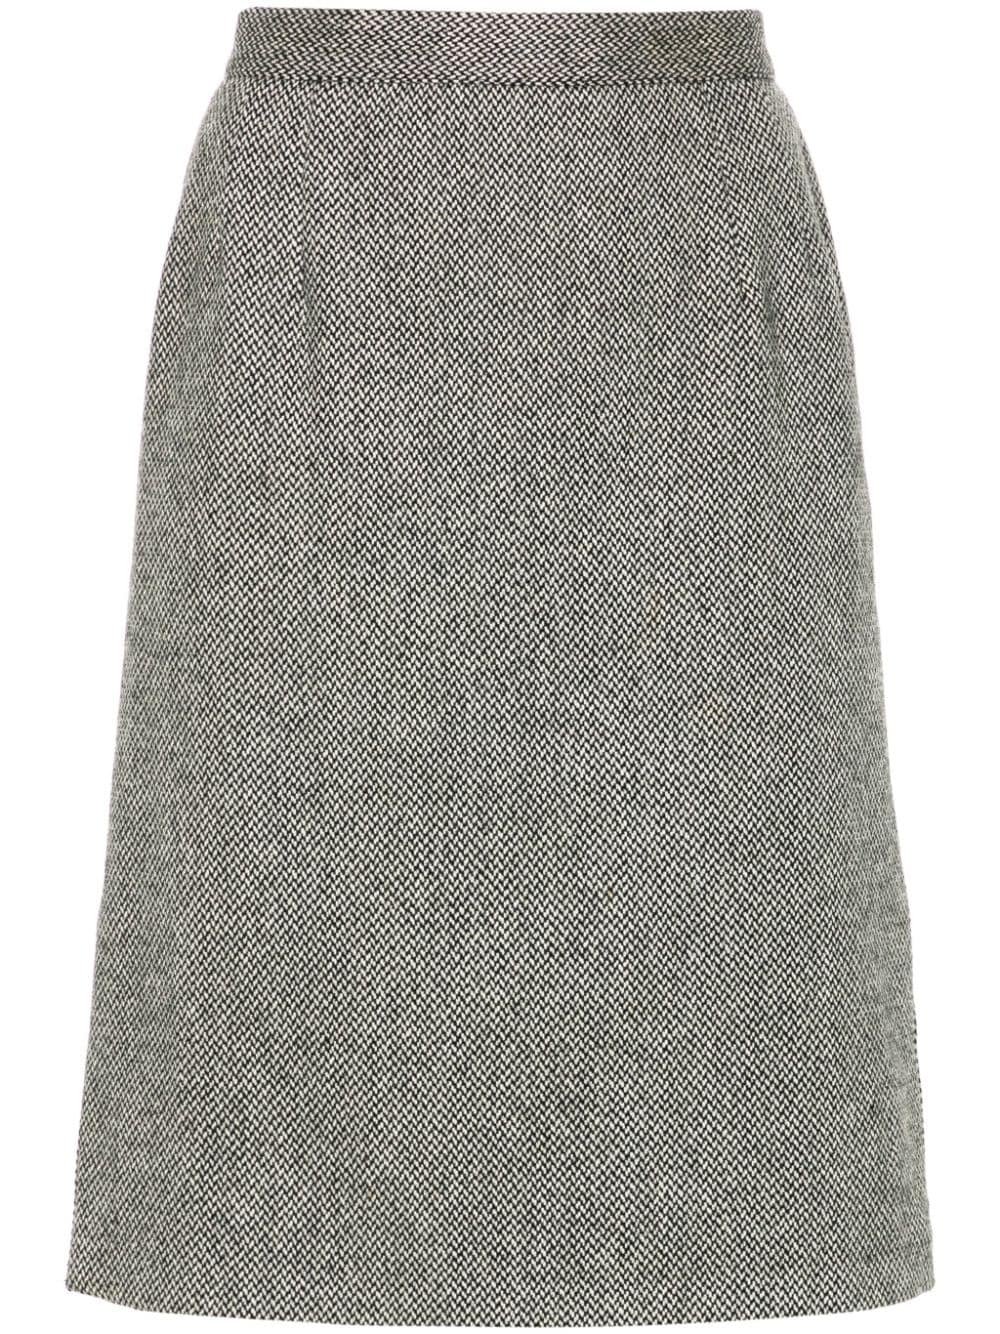 1990s interwoven-design wool skirt